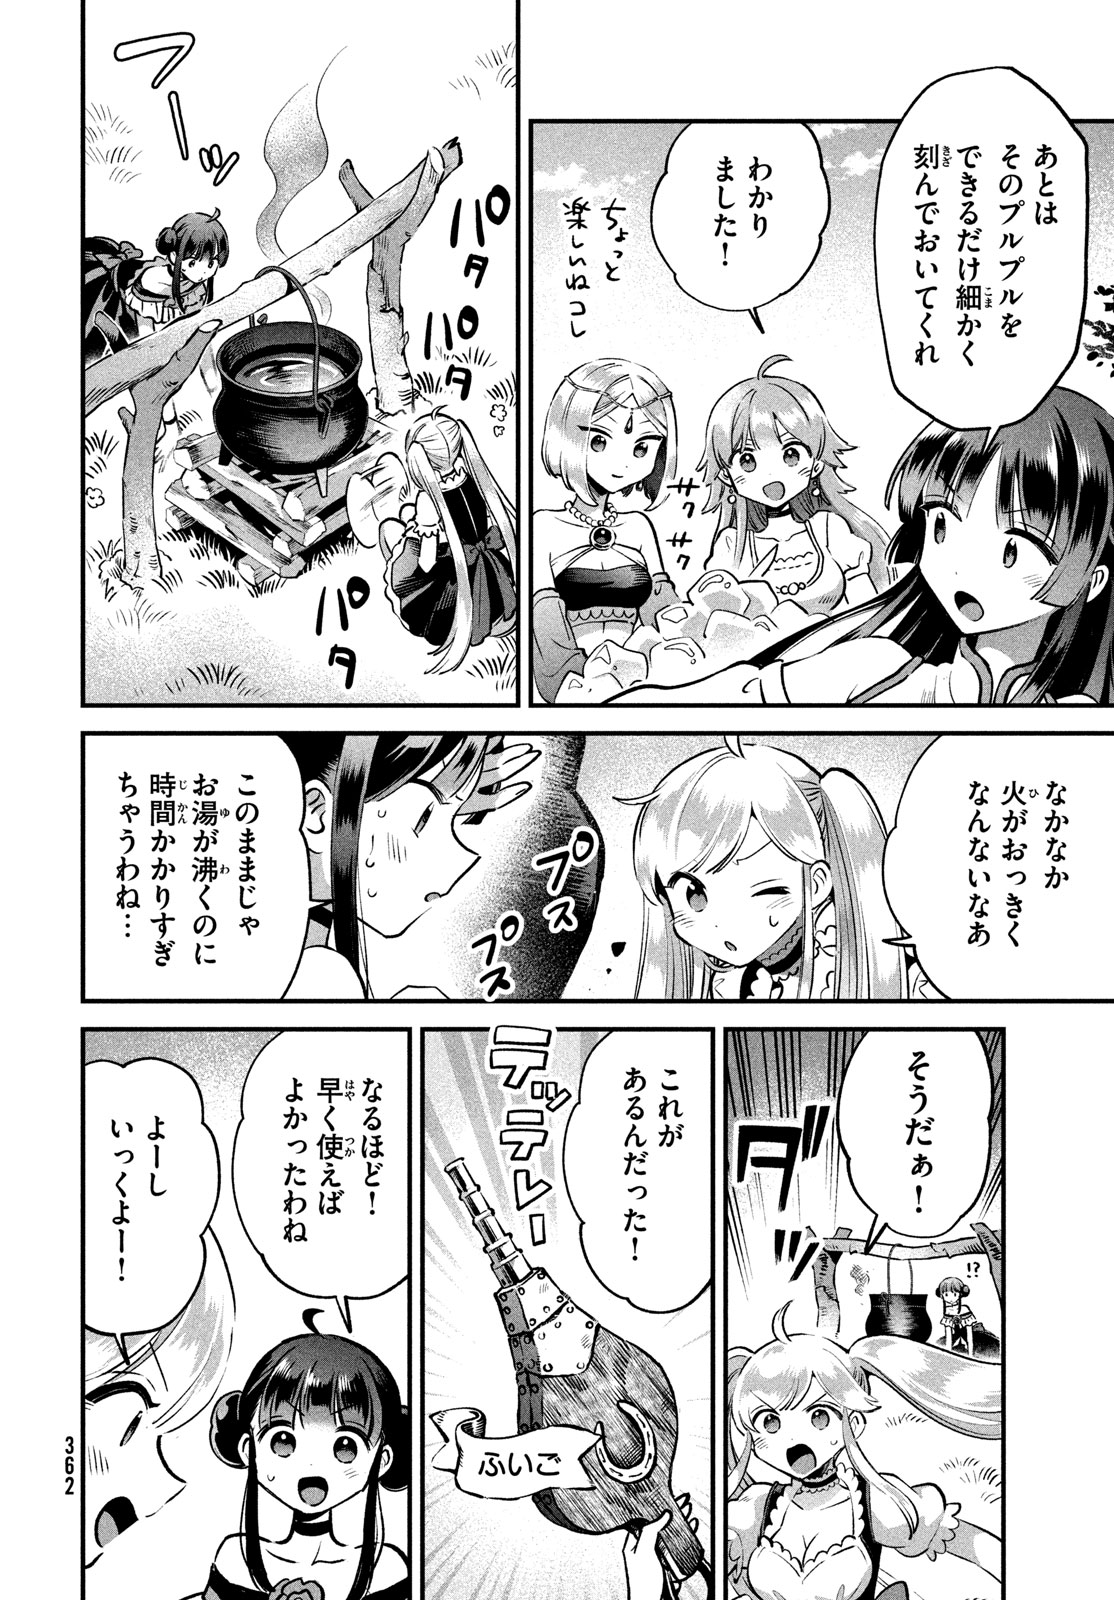 7-nin no Nemuri Hime - Chapter 45 - Page 8